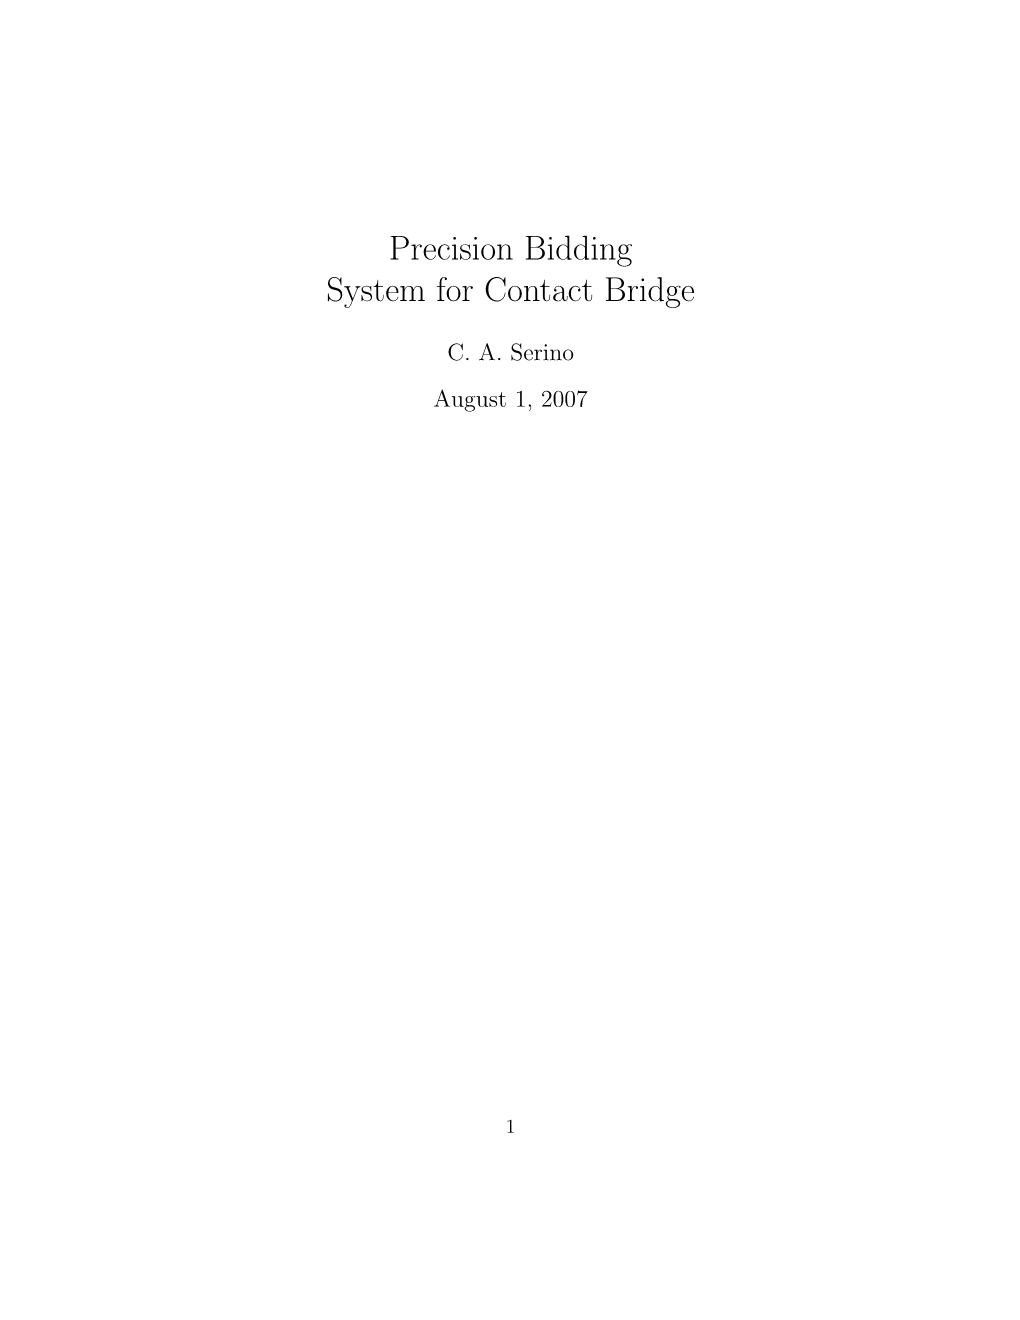 Precision Bidding System for Contact Bridge